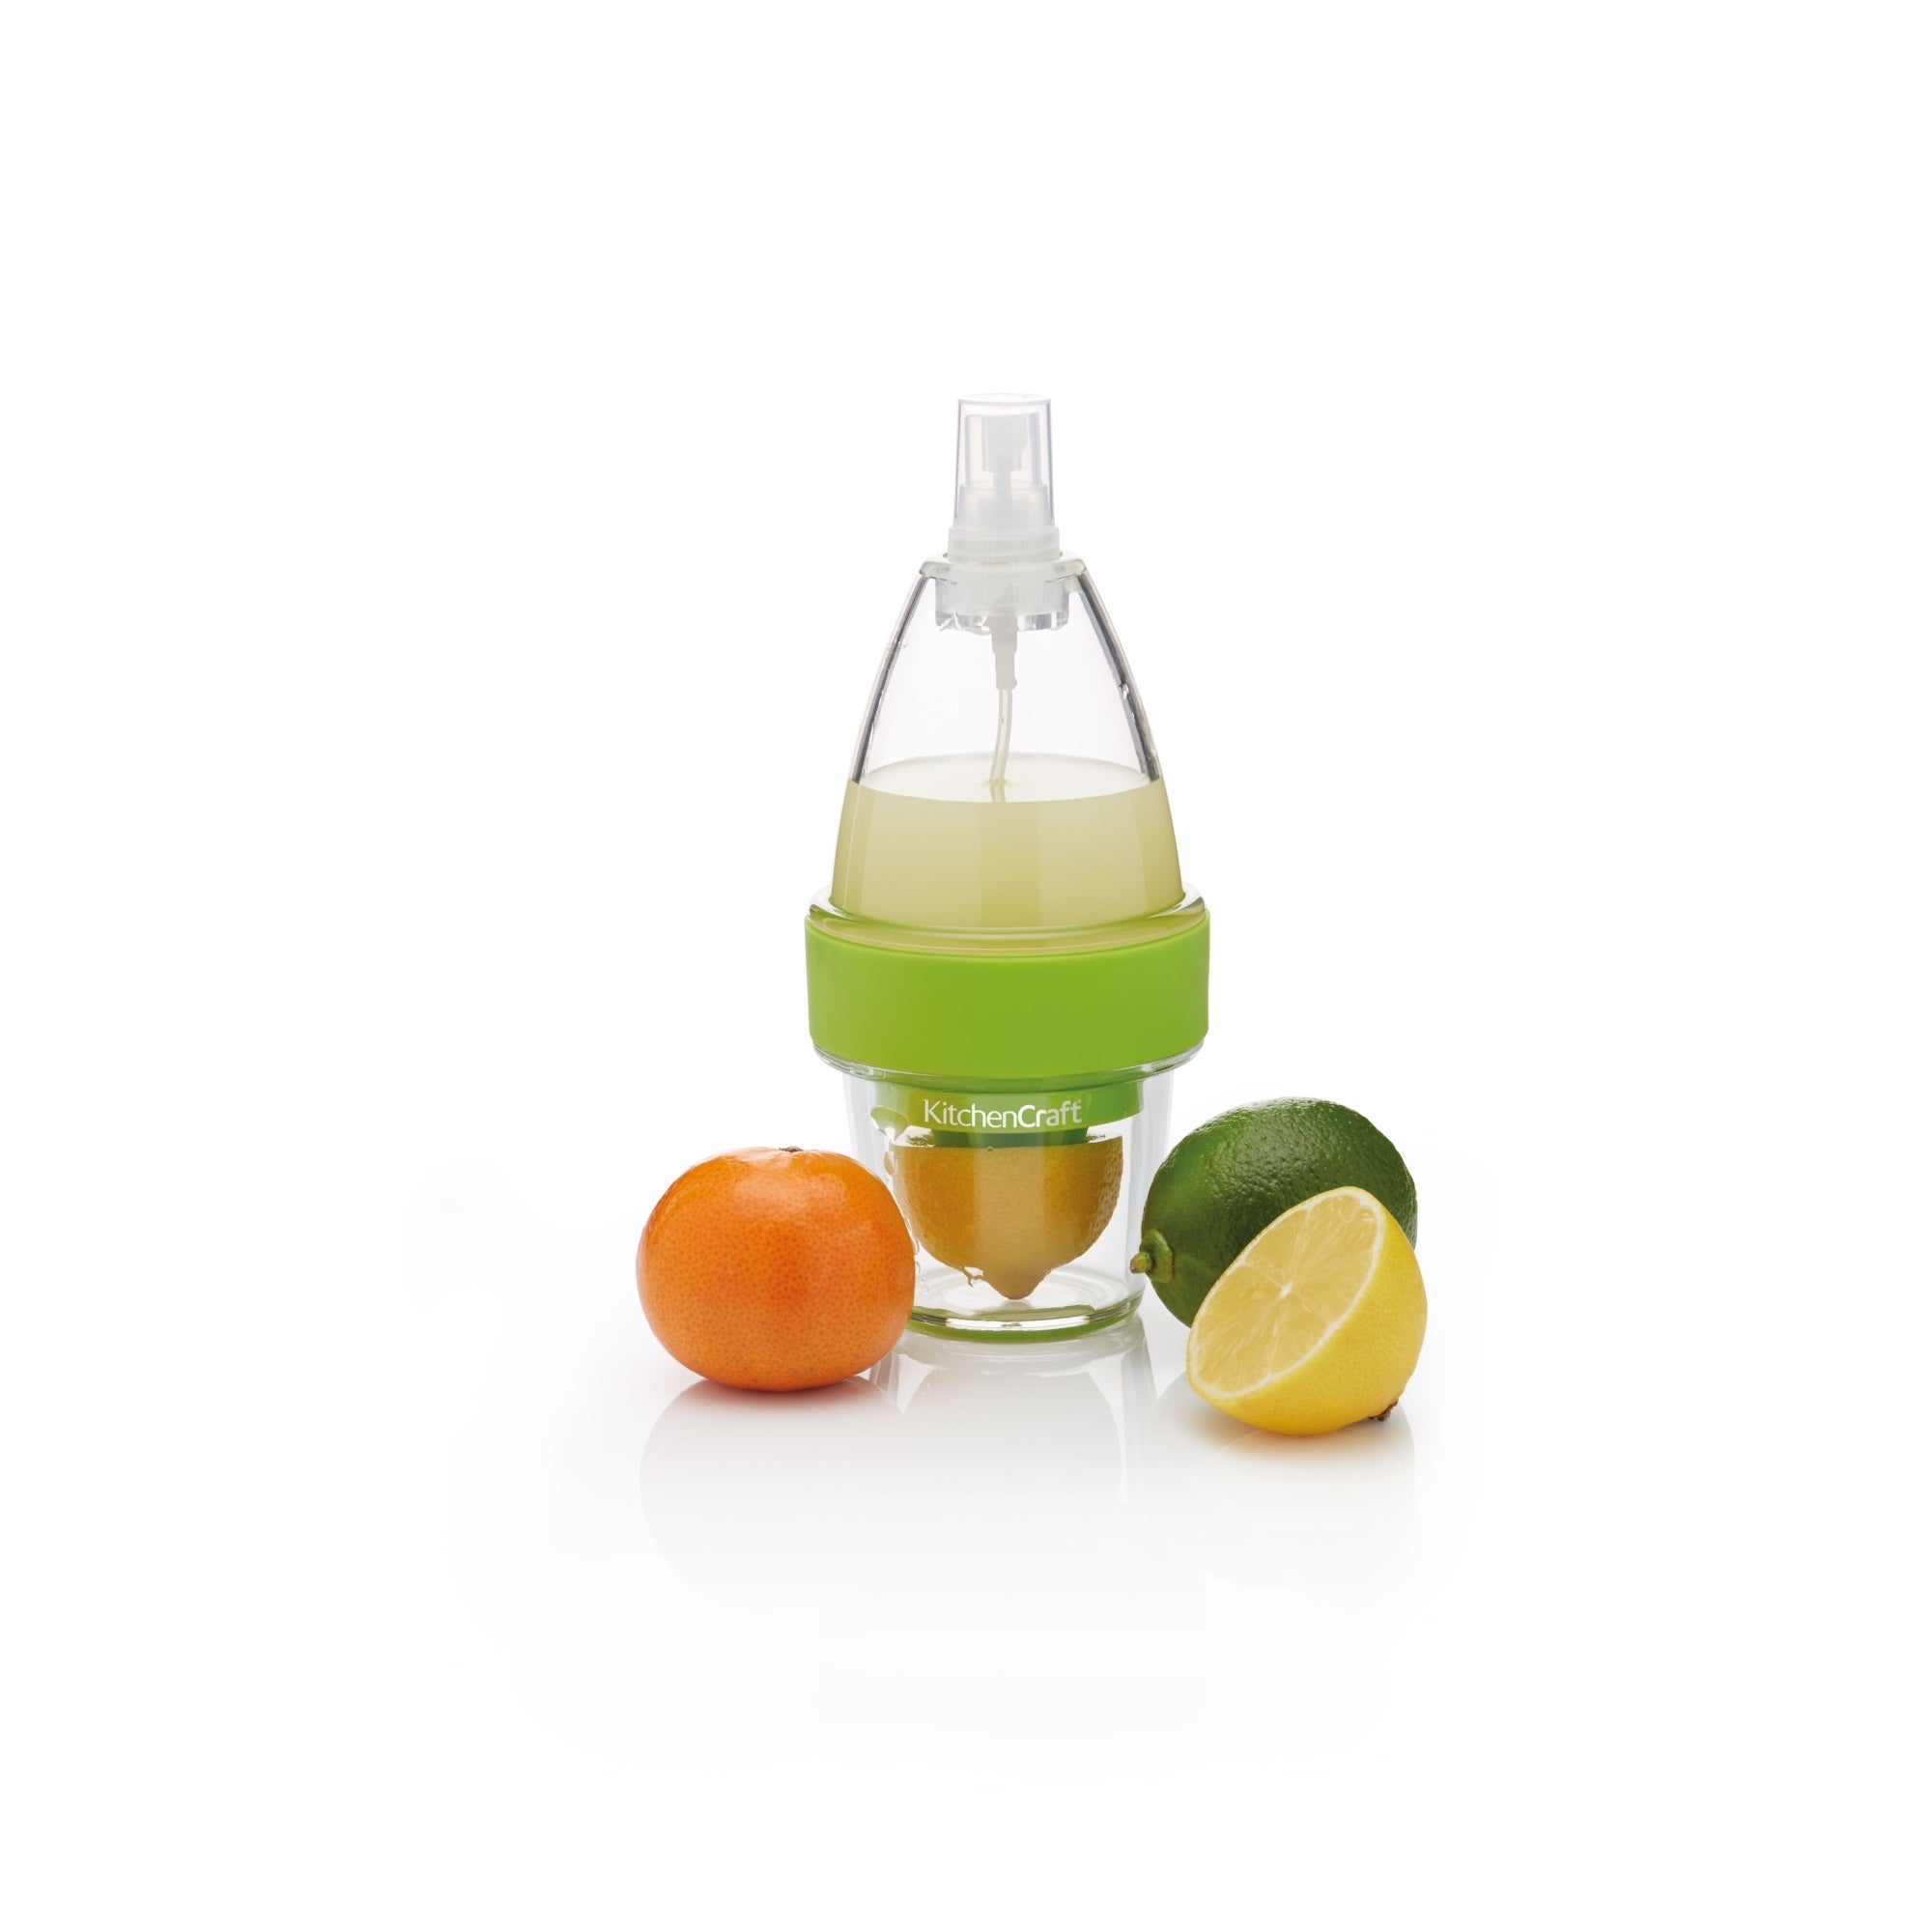 KitchenCraft Citrus Lemon Spritzer - The Cooks Cupboard Ltd